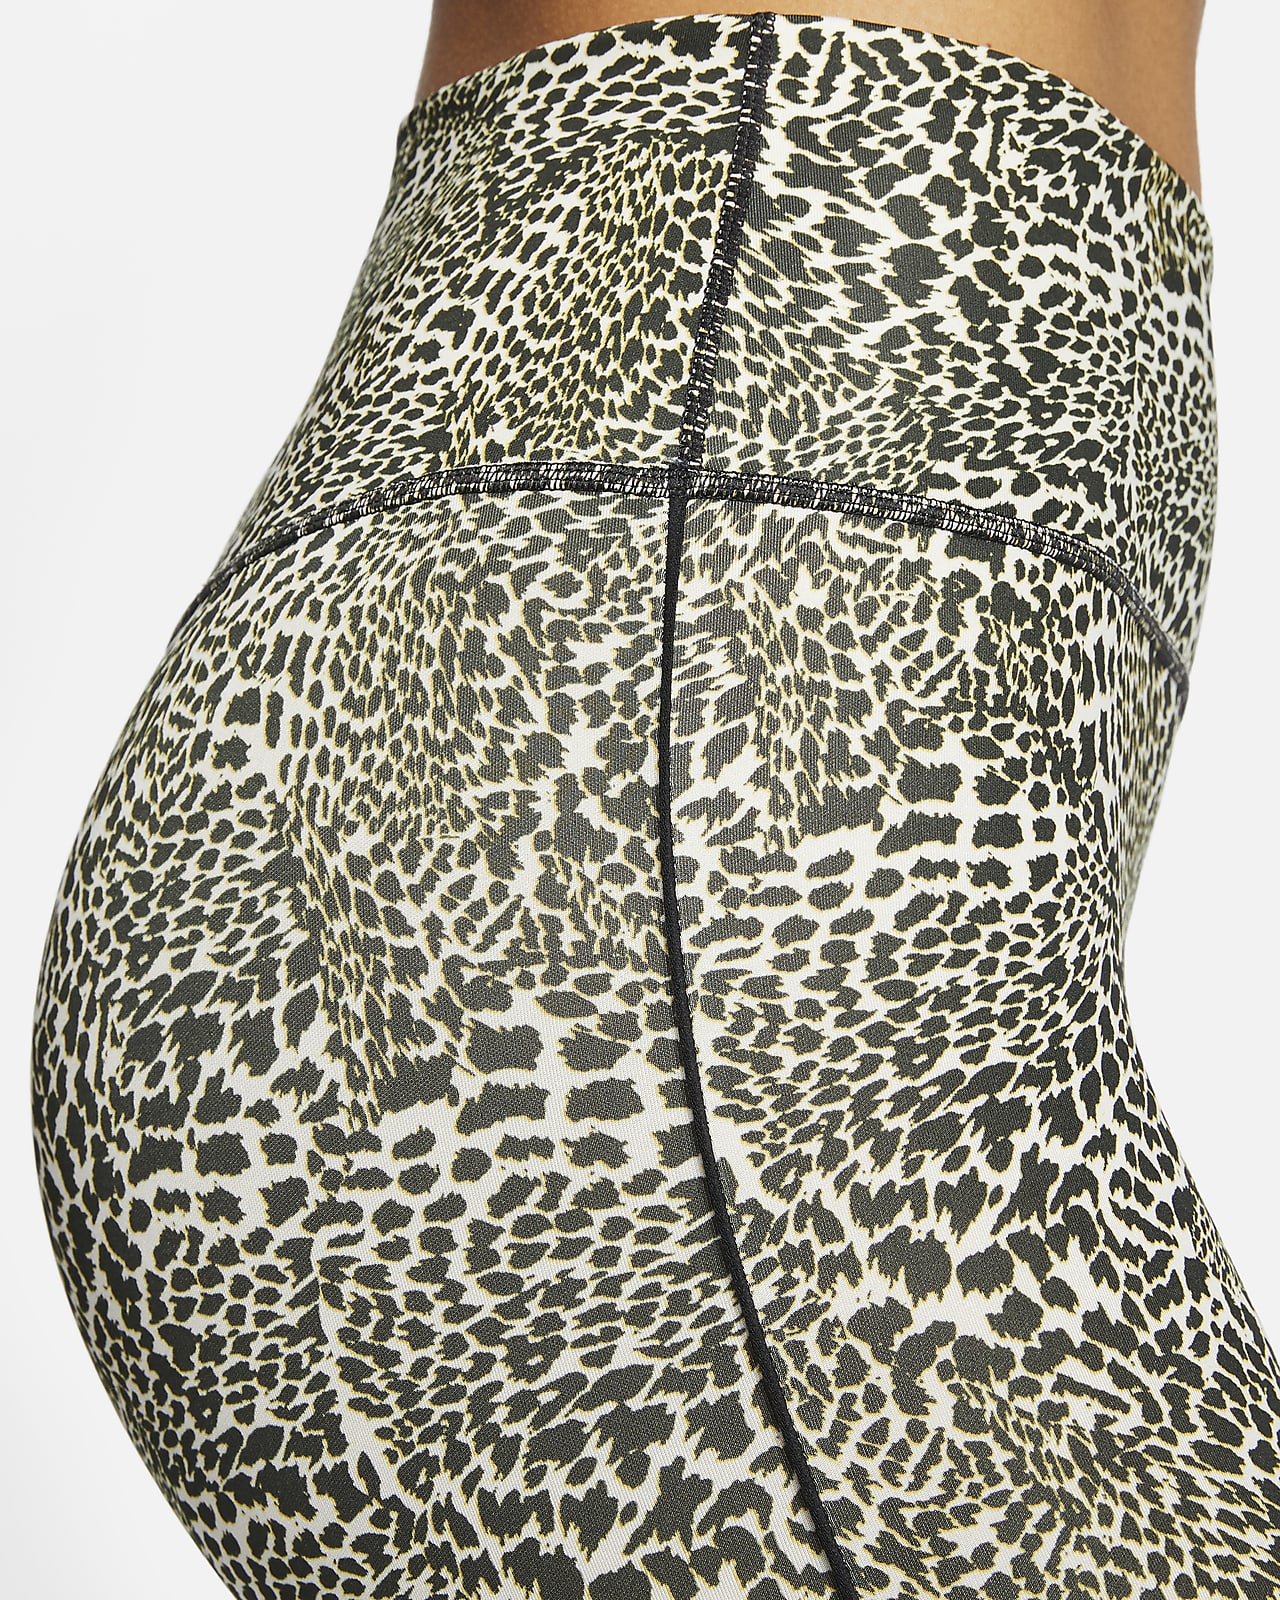 Leopard Mid-Rise 7/8 Tights. Nike 